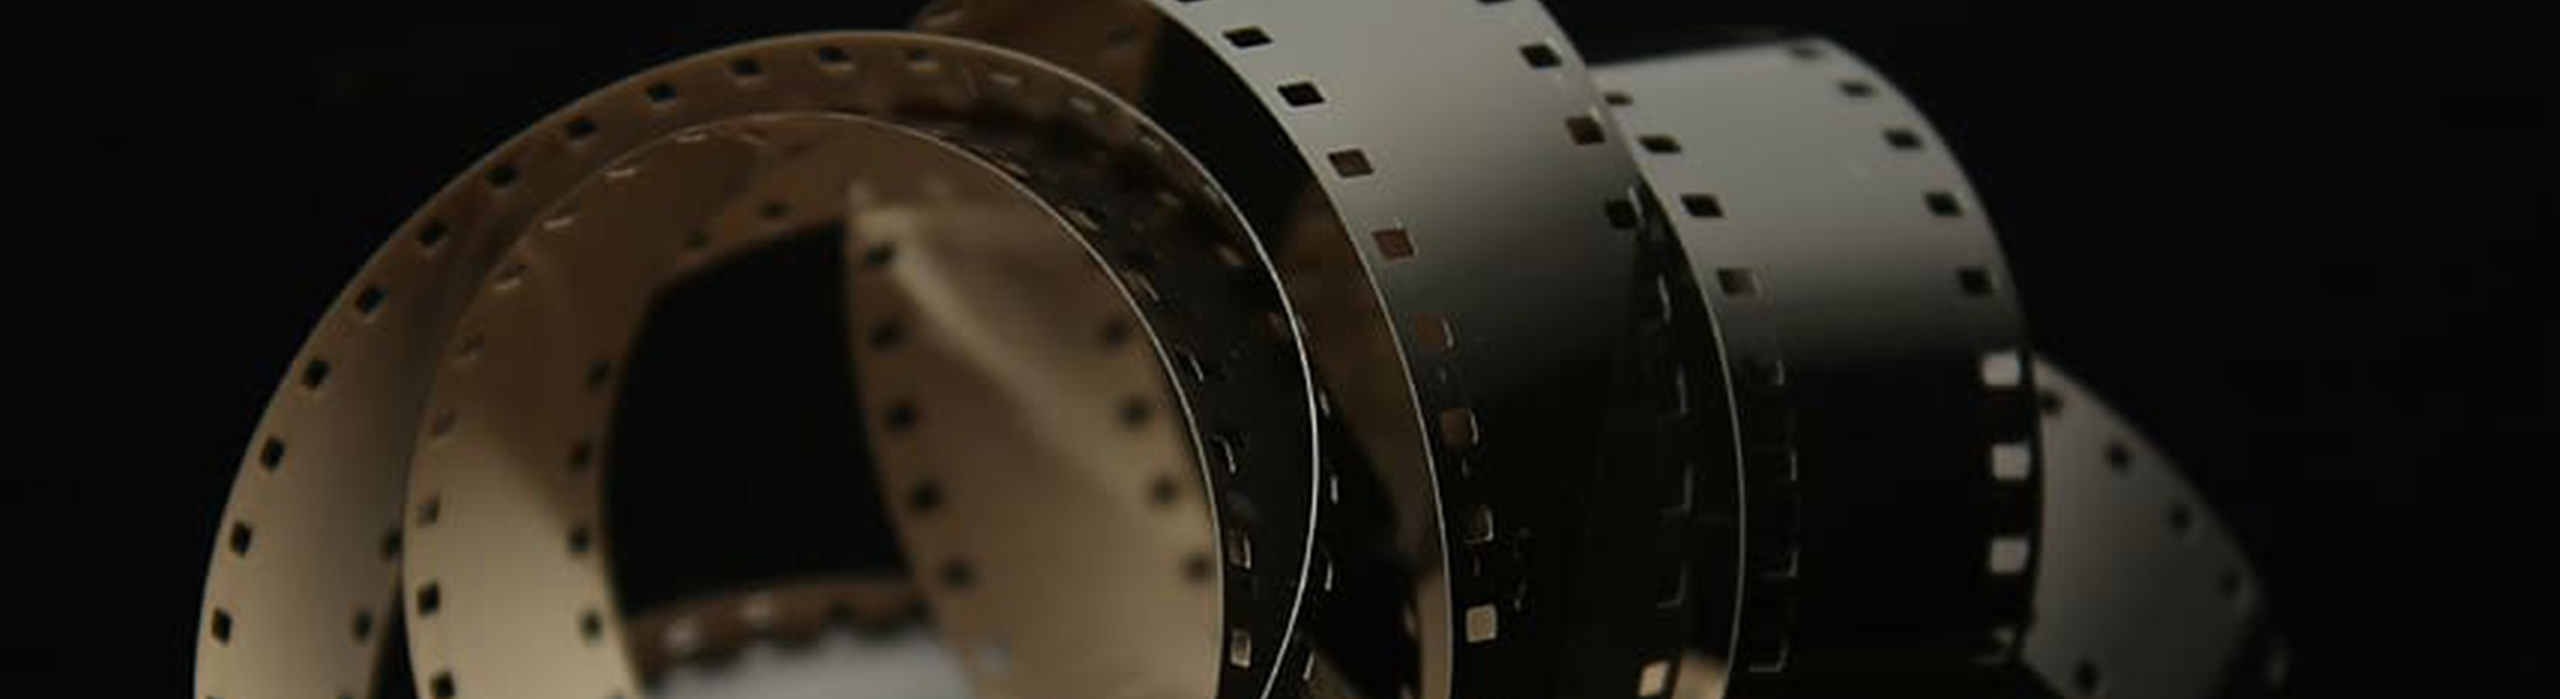 Film Recovery, Film Restoration, Movie Film Transfers & Scanning